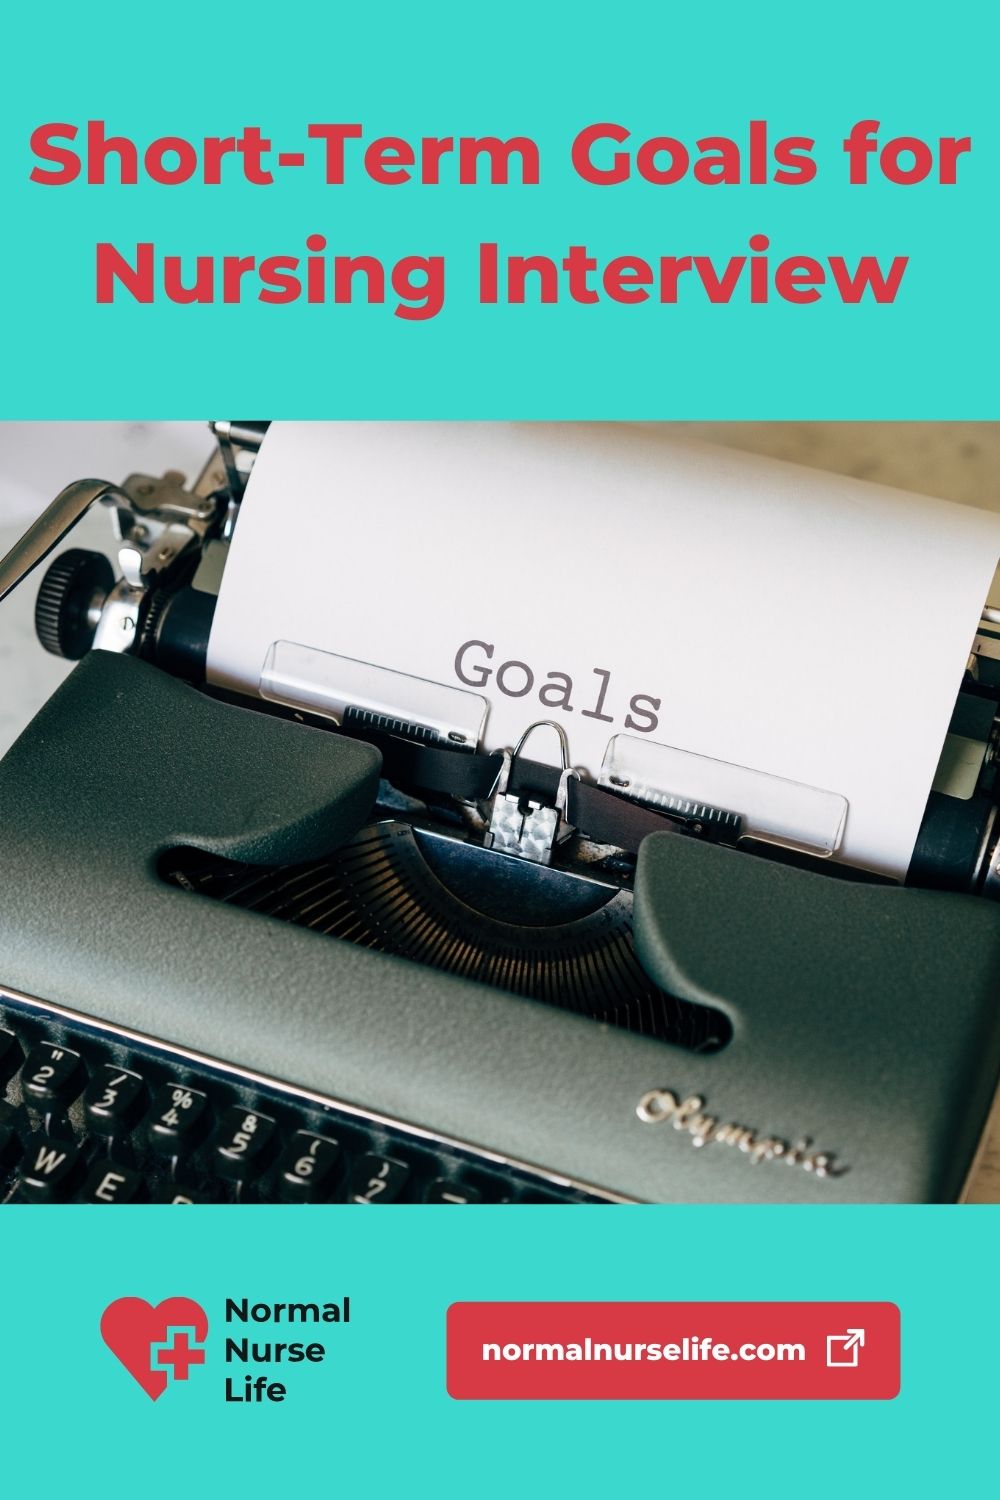 Short-term goals for nursing interview question